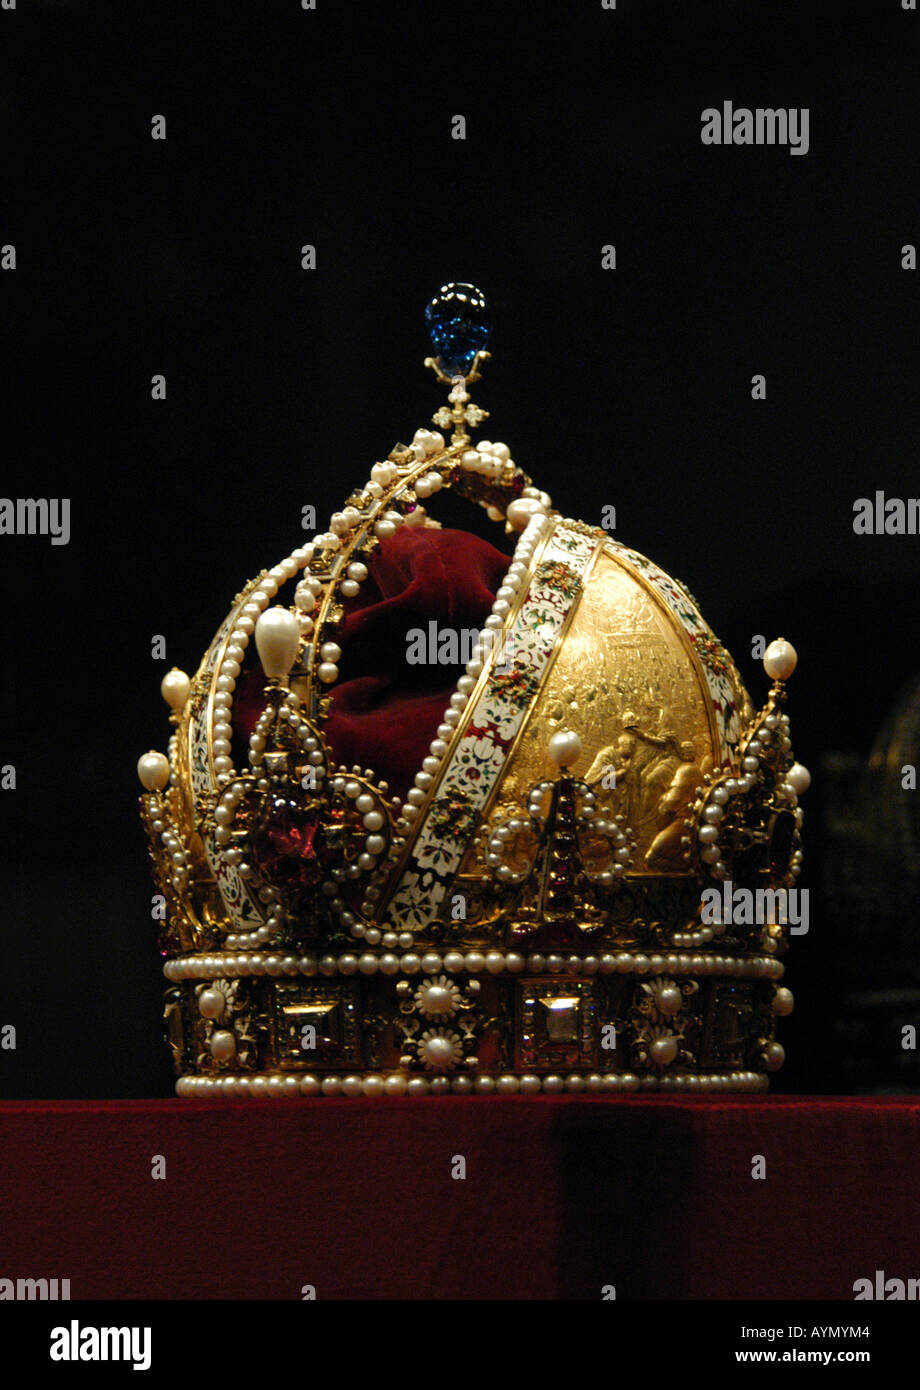 Golden crown of the Austro-Hungarian emperor Rudolf II in Hofburg Palace in Vienna, Austria. Stock Photo